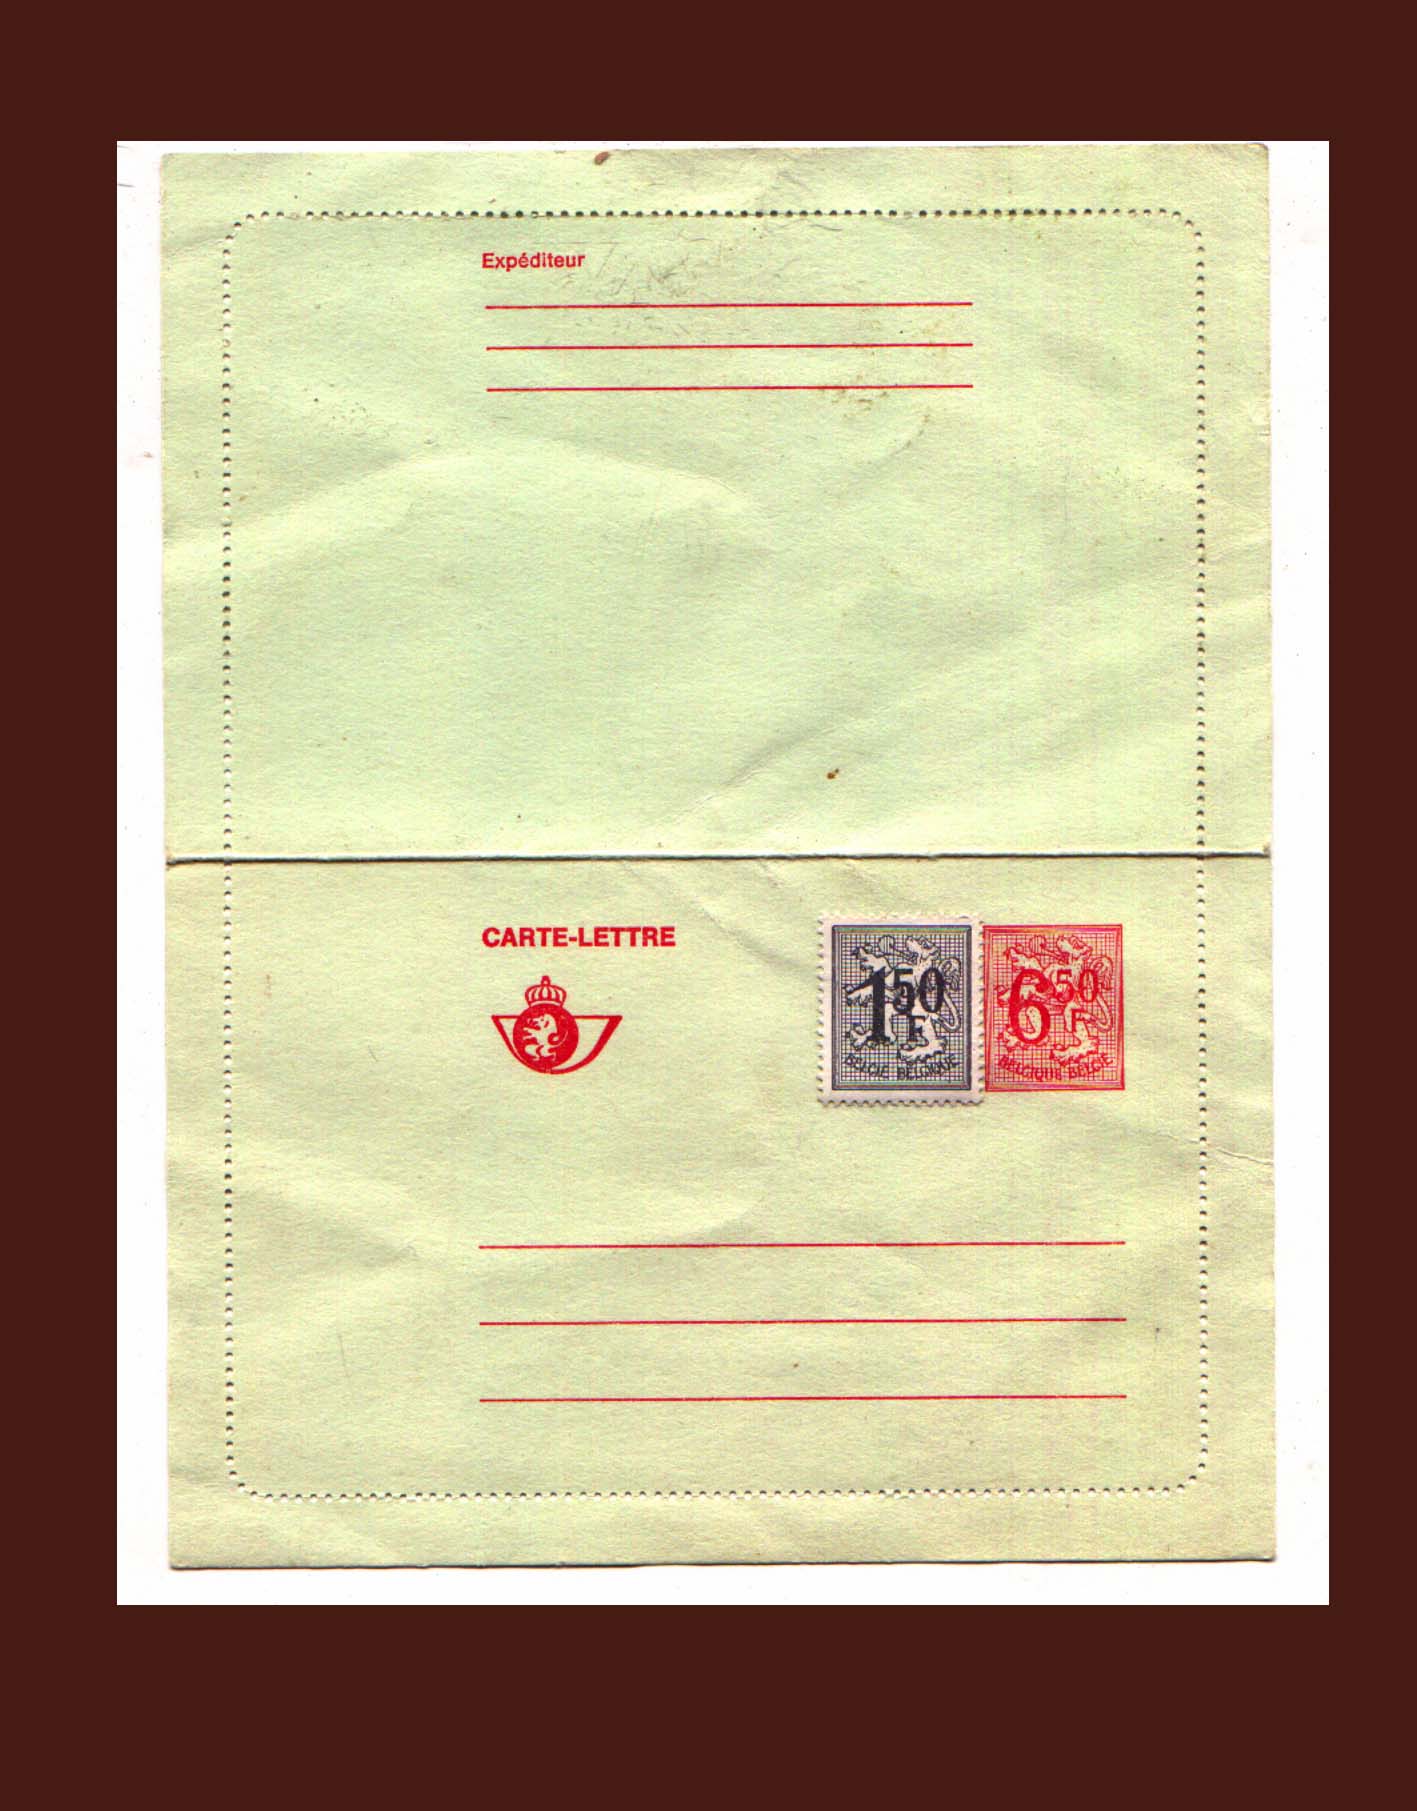 CARTE LETTRE - Post Office Leaflets